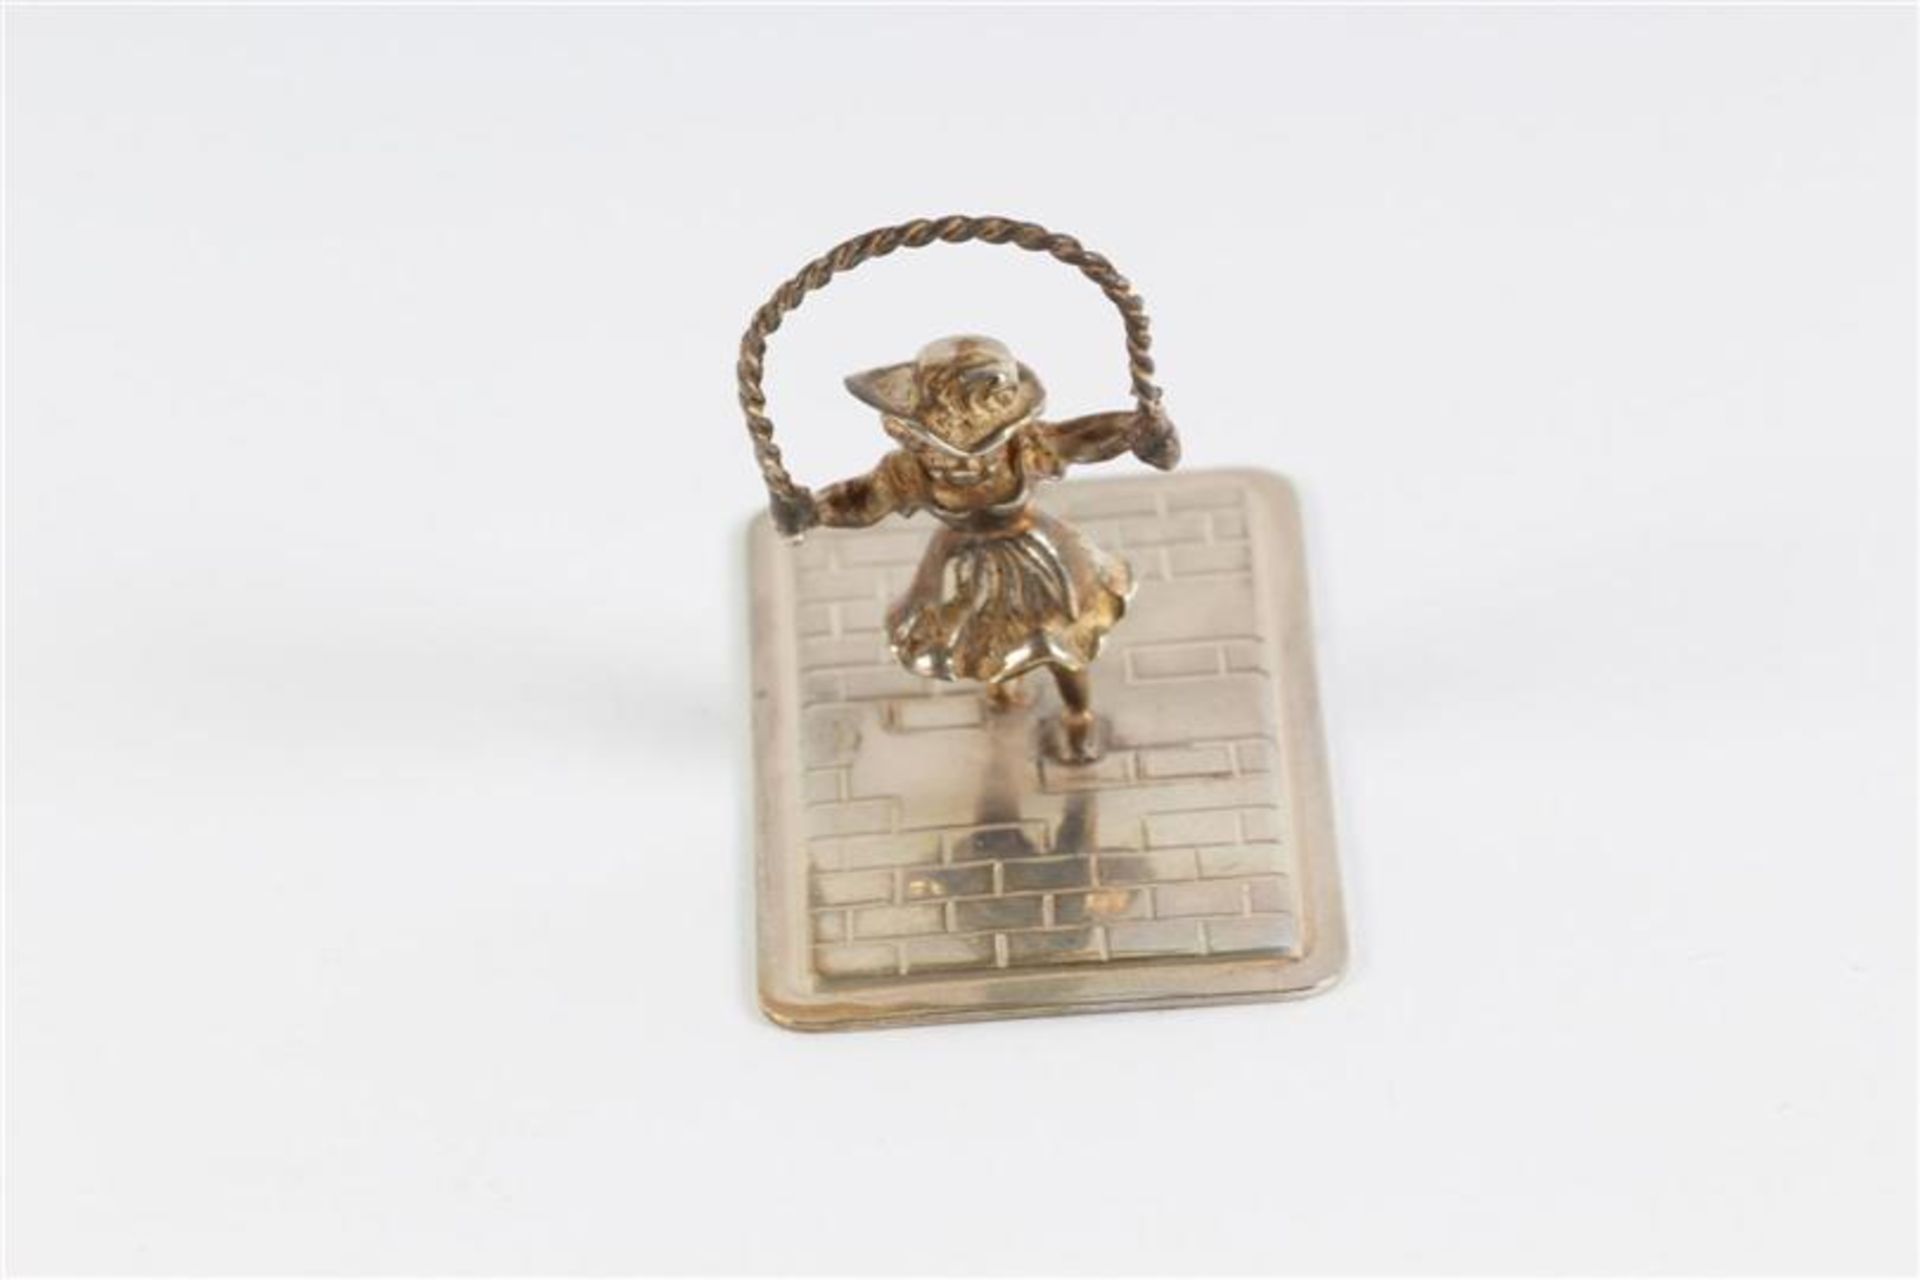 Vijf zilveren miniaturen, 'Spelend kind'. Gewicht: 50 g. - Bild 8 aus 11